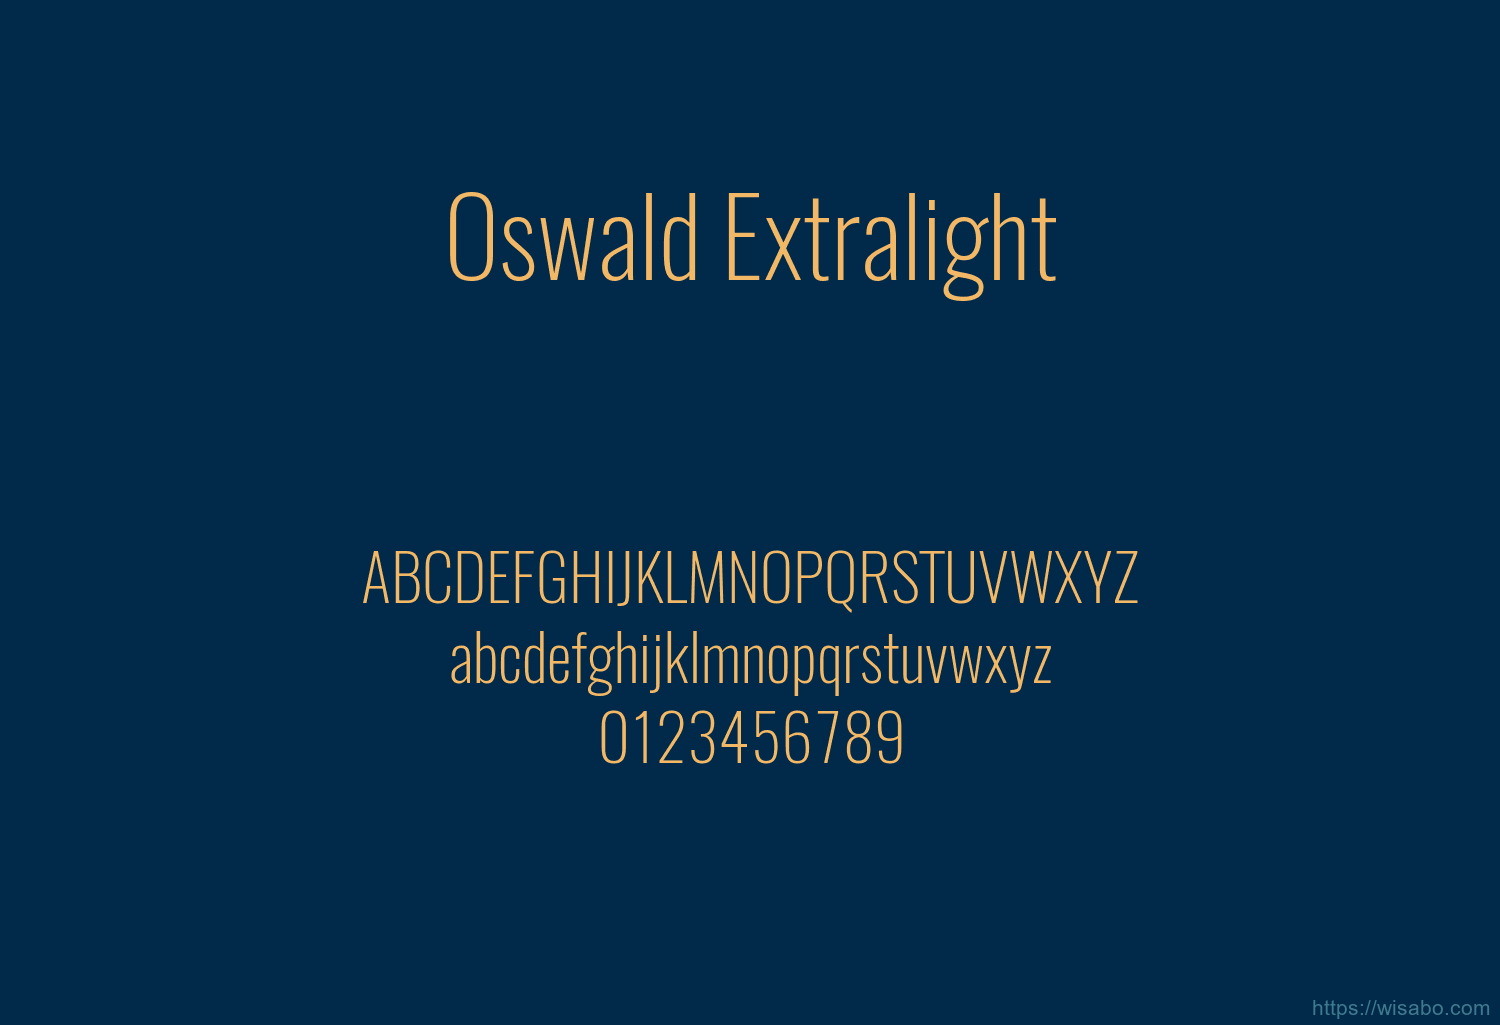 Oswald Extralight